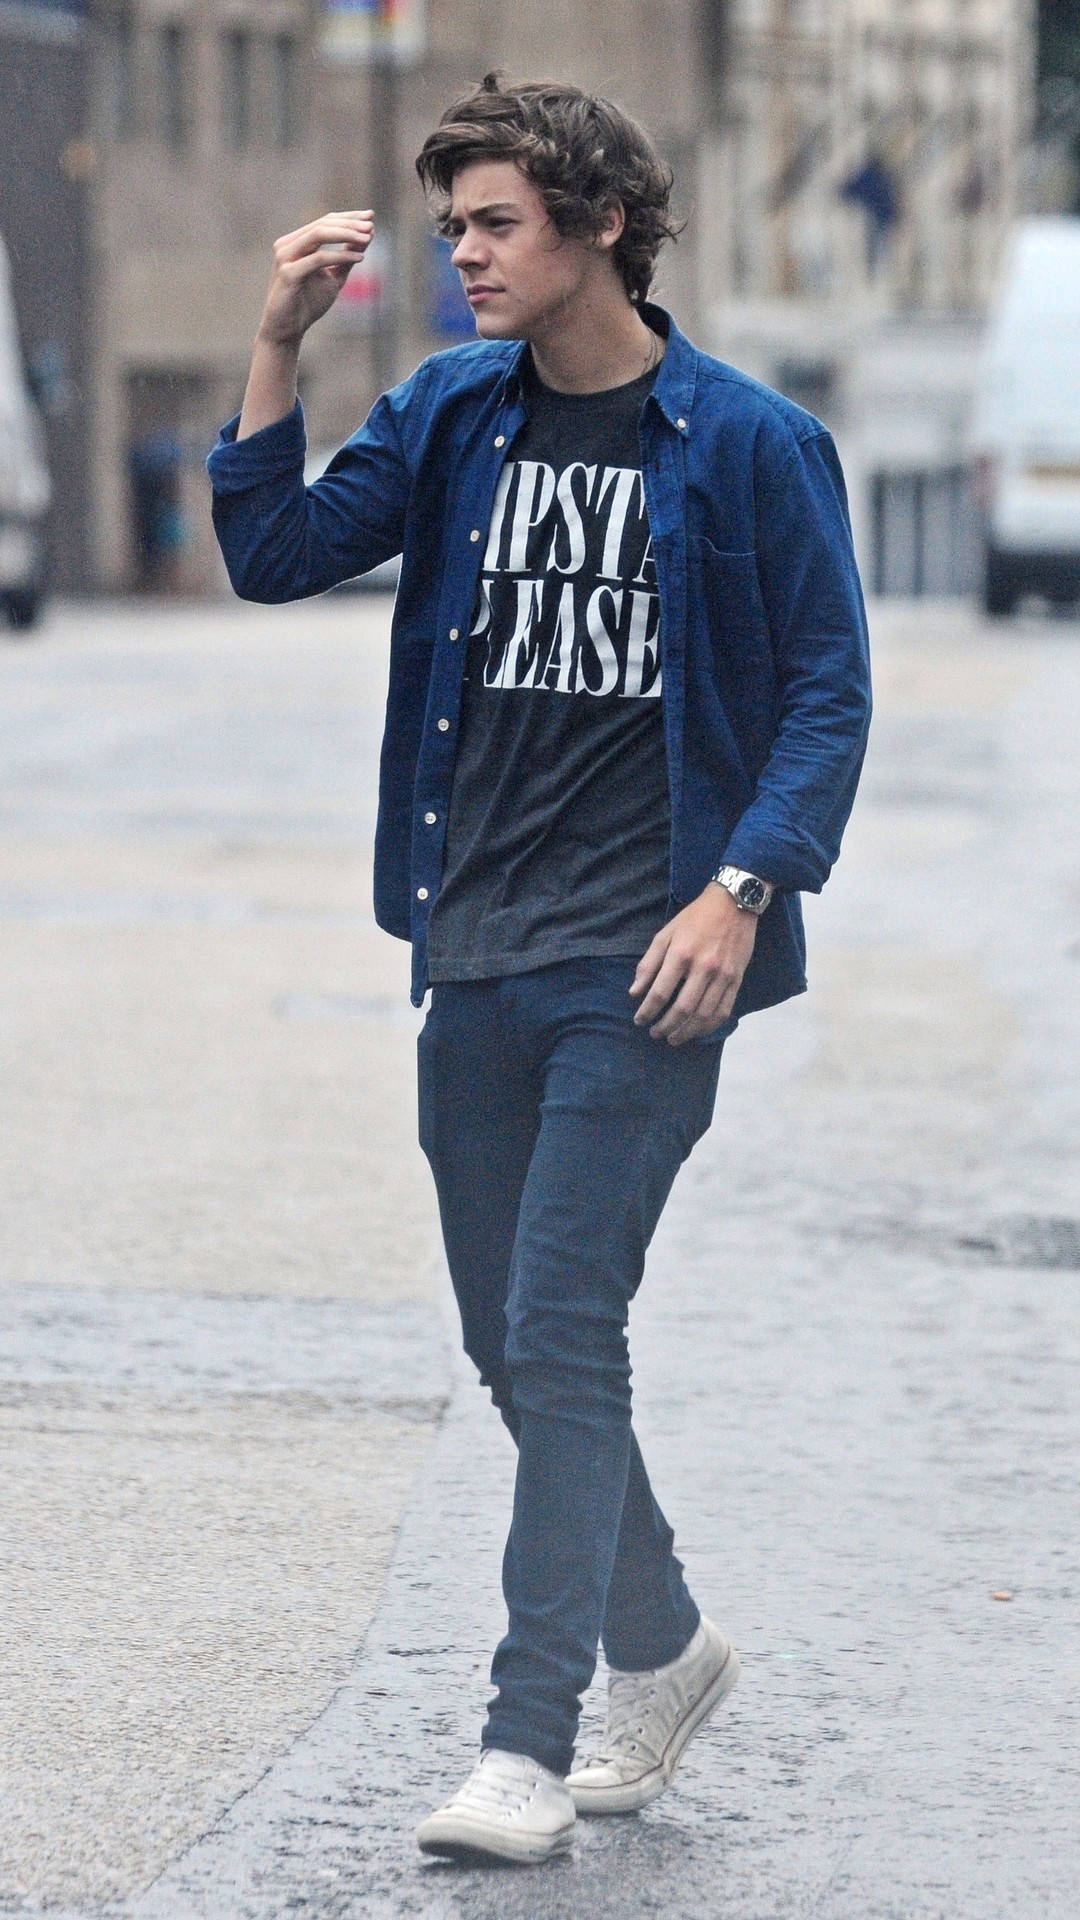 Iphone Harry Styles In A Blue Jacket Wallpaper